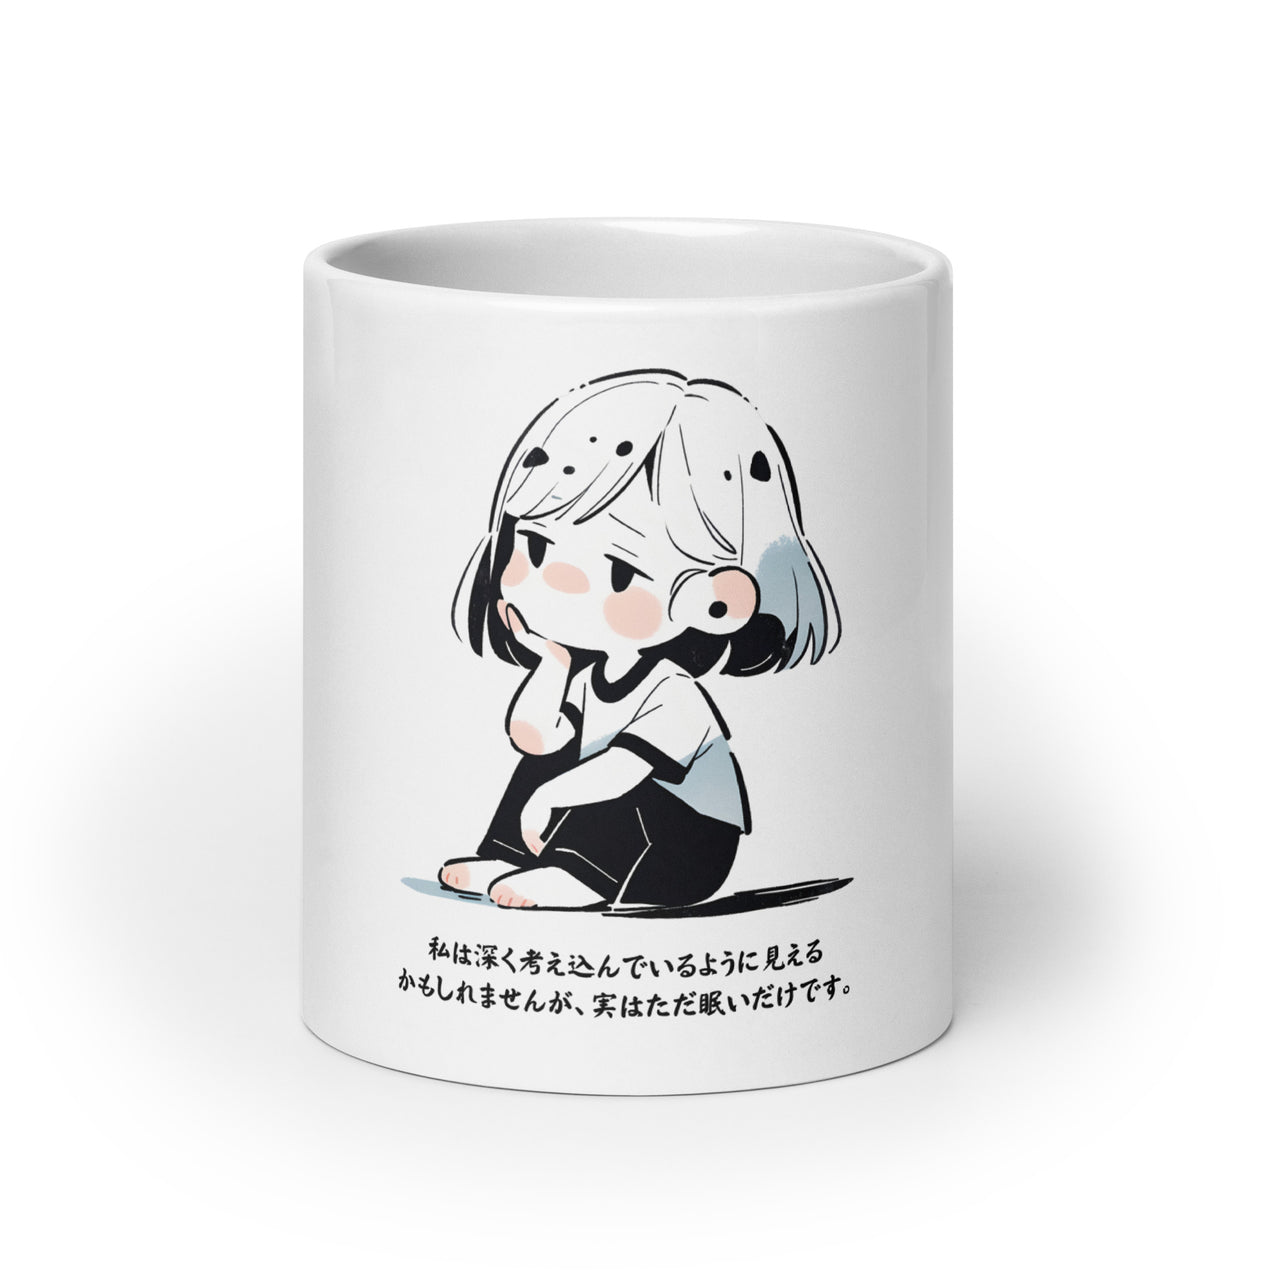 Manga Girl's Sleepy Thoughts in Japanese White Mug